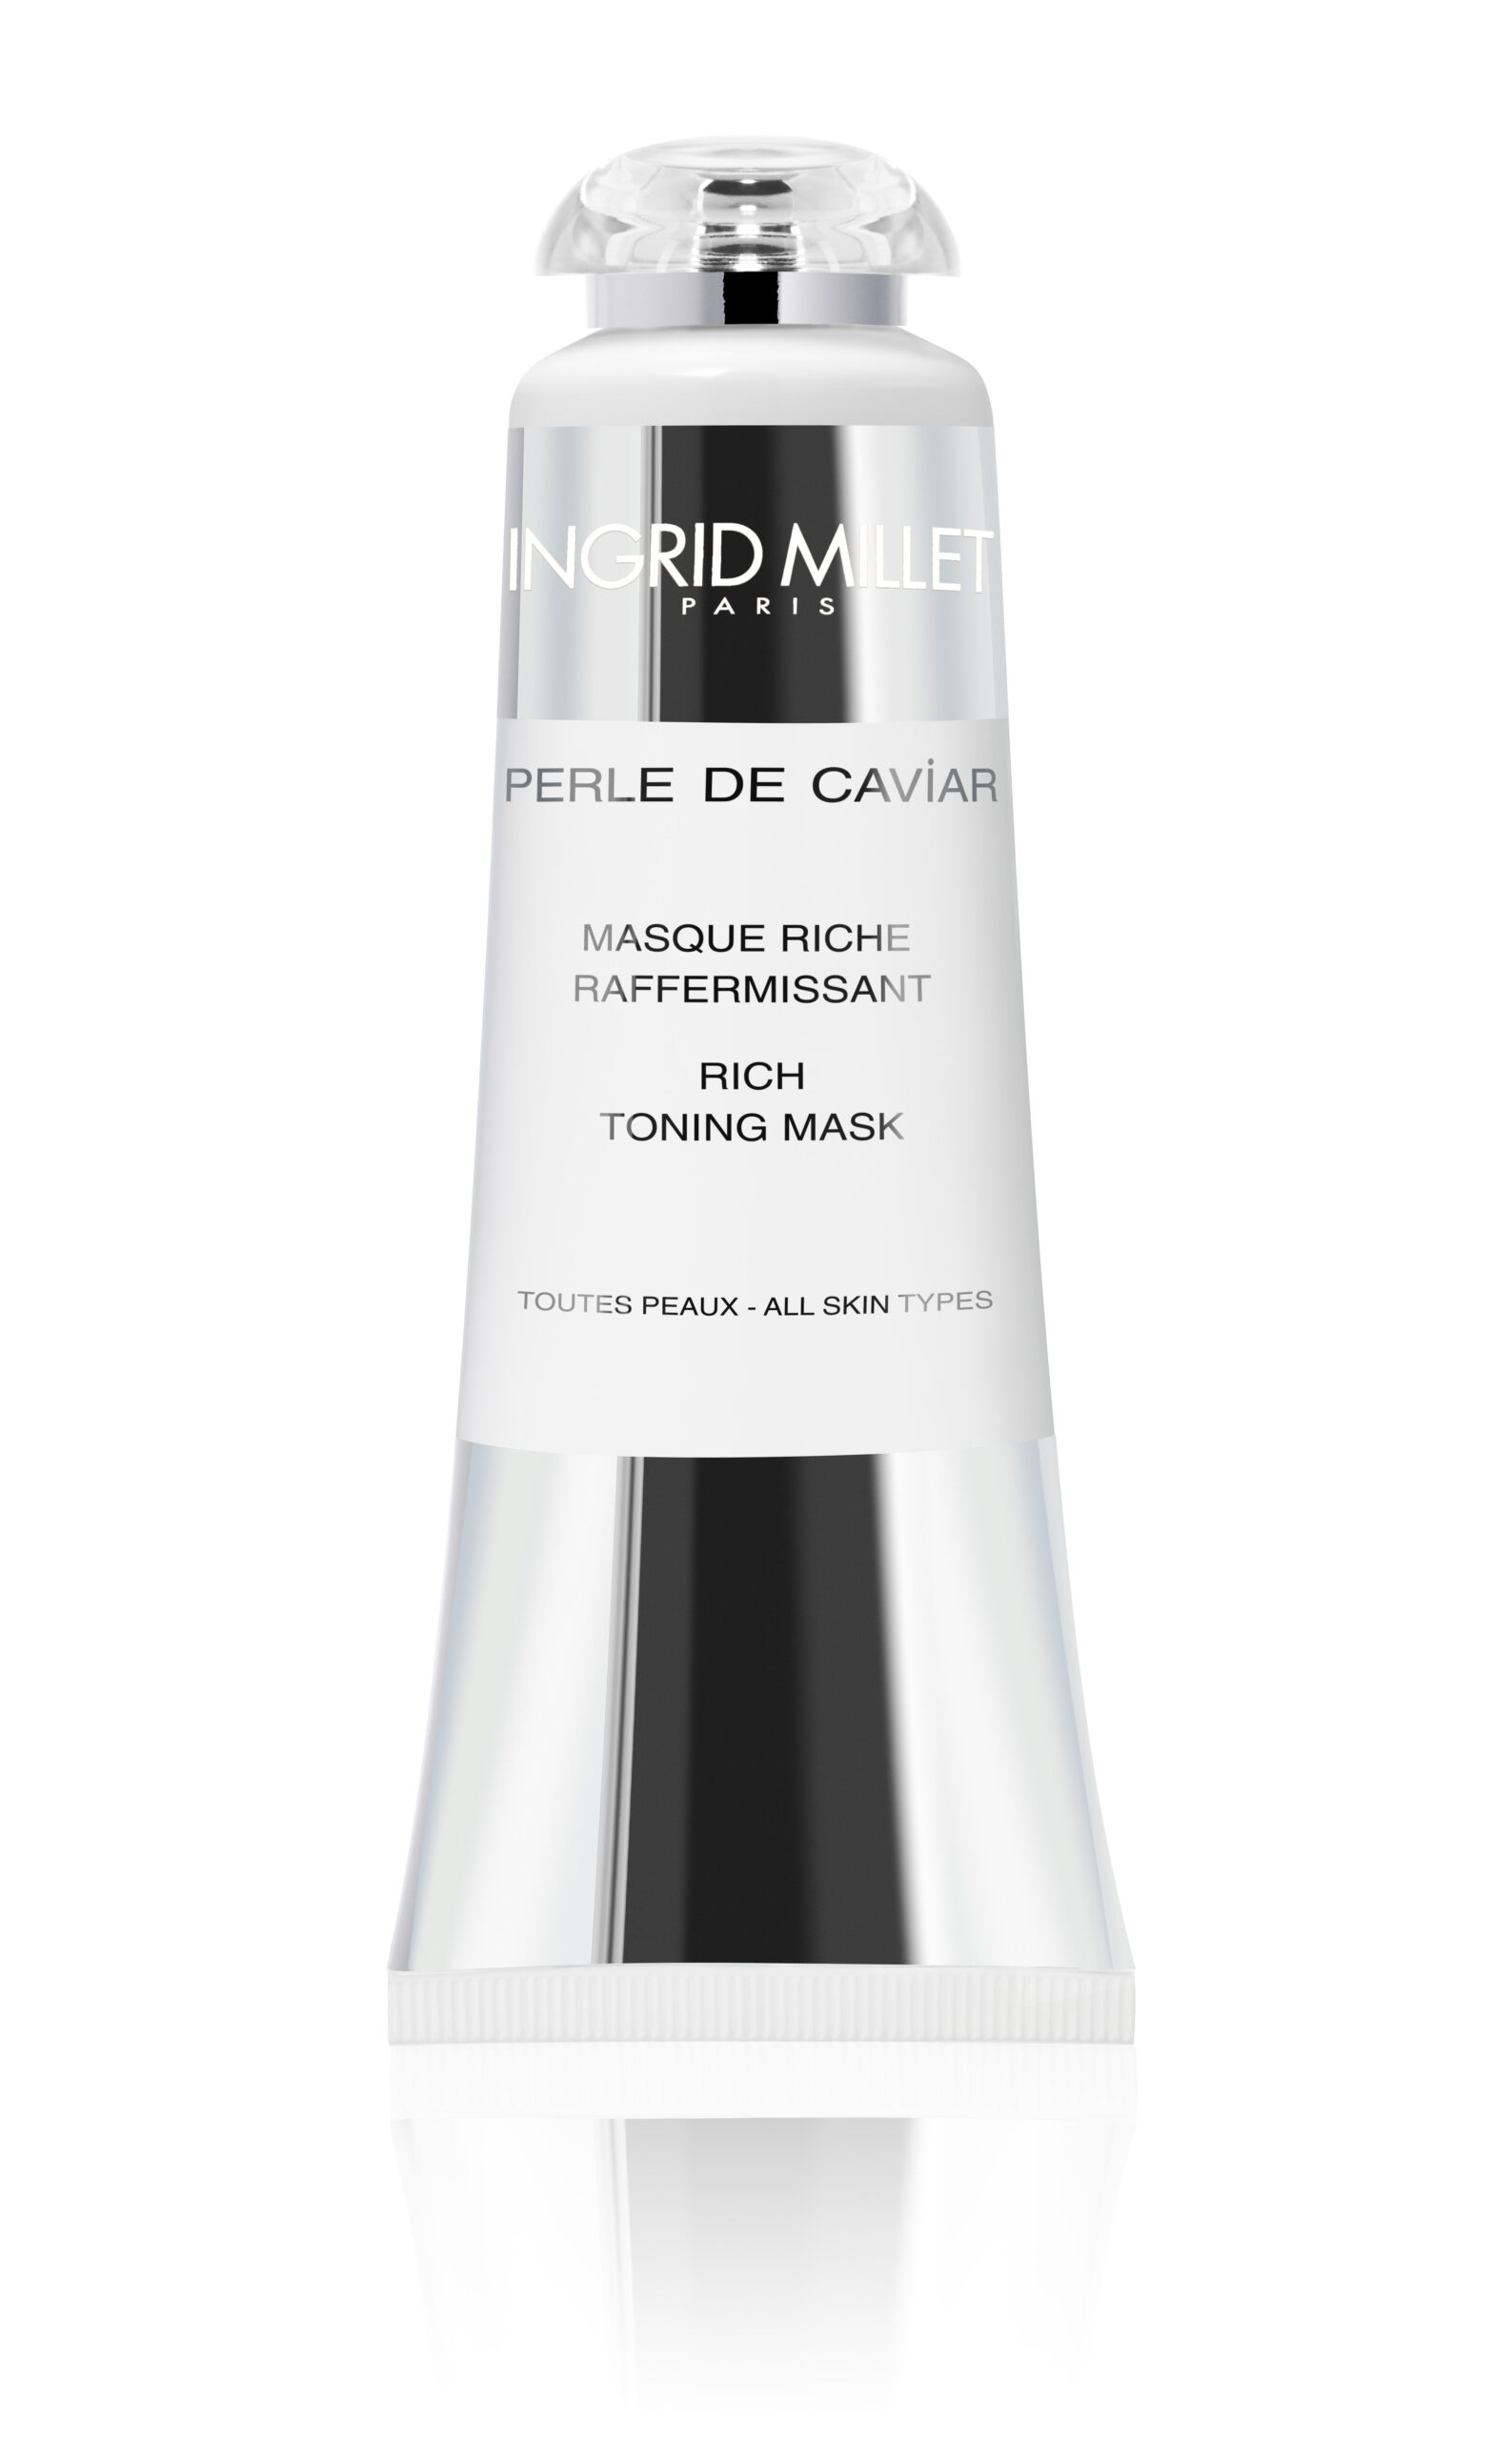 Ingrid Millet Perle de Caviar Masque Riche Raffermissant 75ml